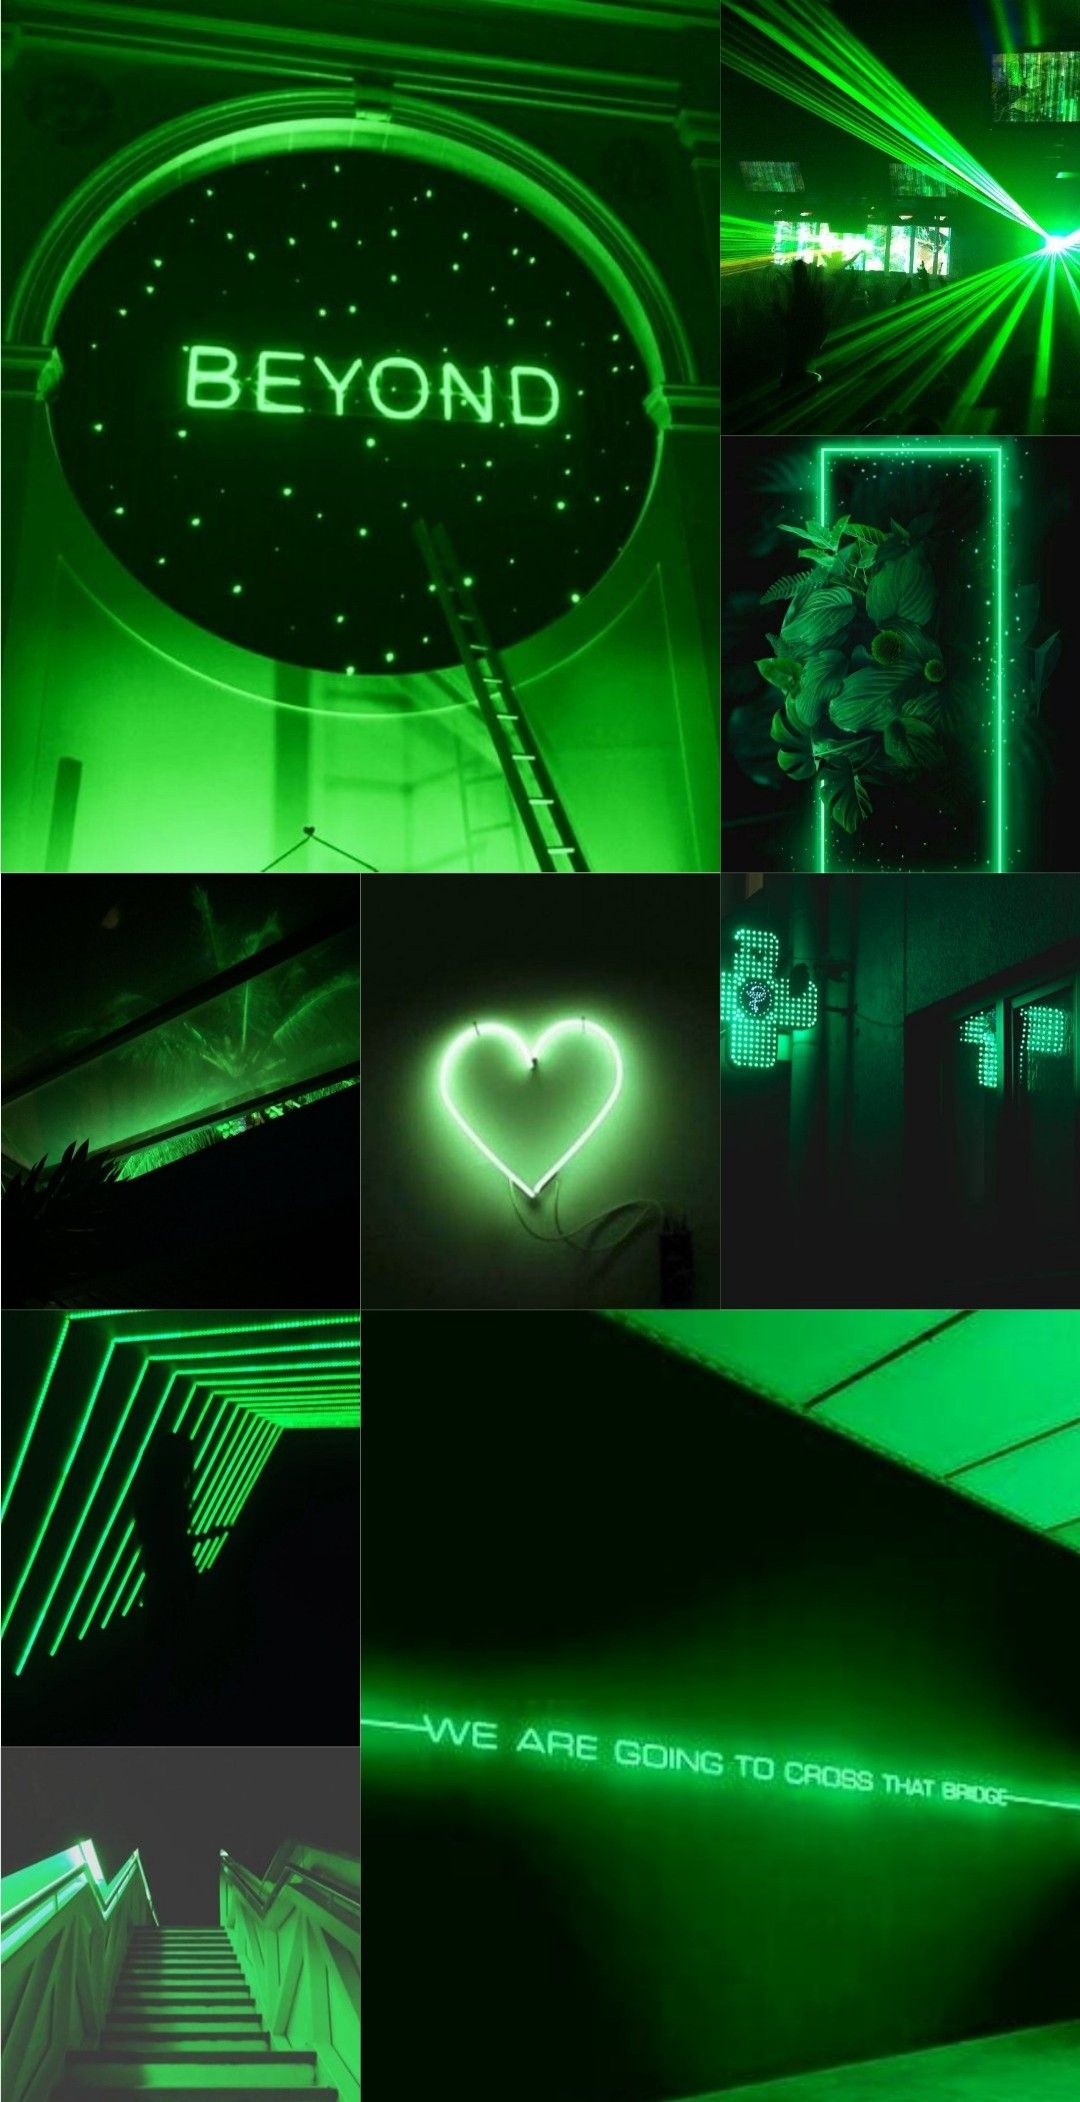 Neon green aesthetic wallpaper in slytherin aesthetic green aesthetic aesthetic wallpapers